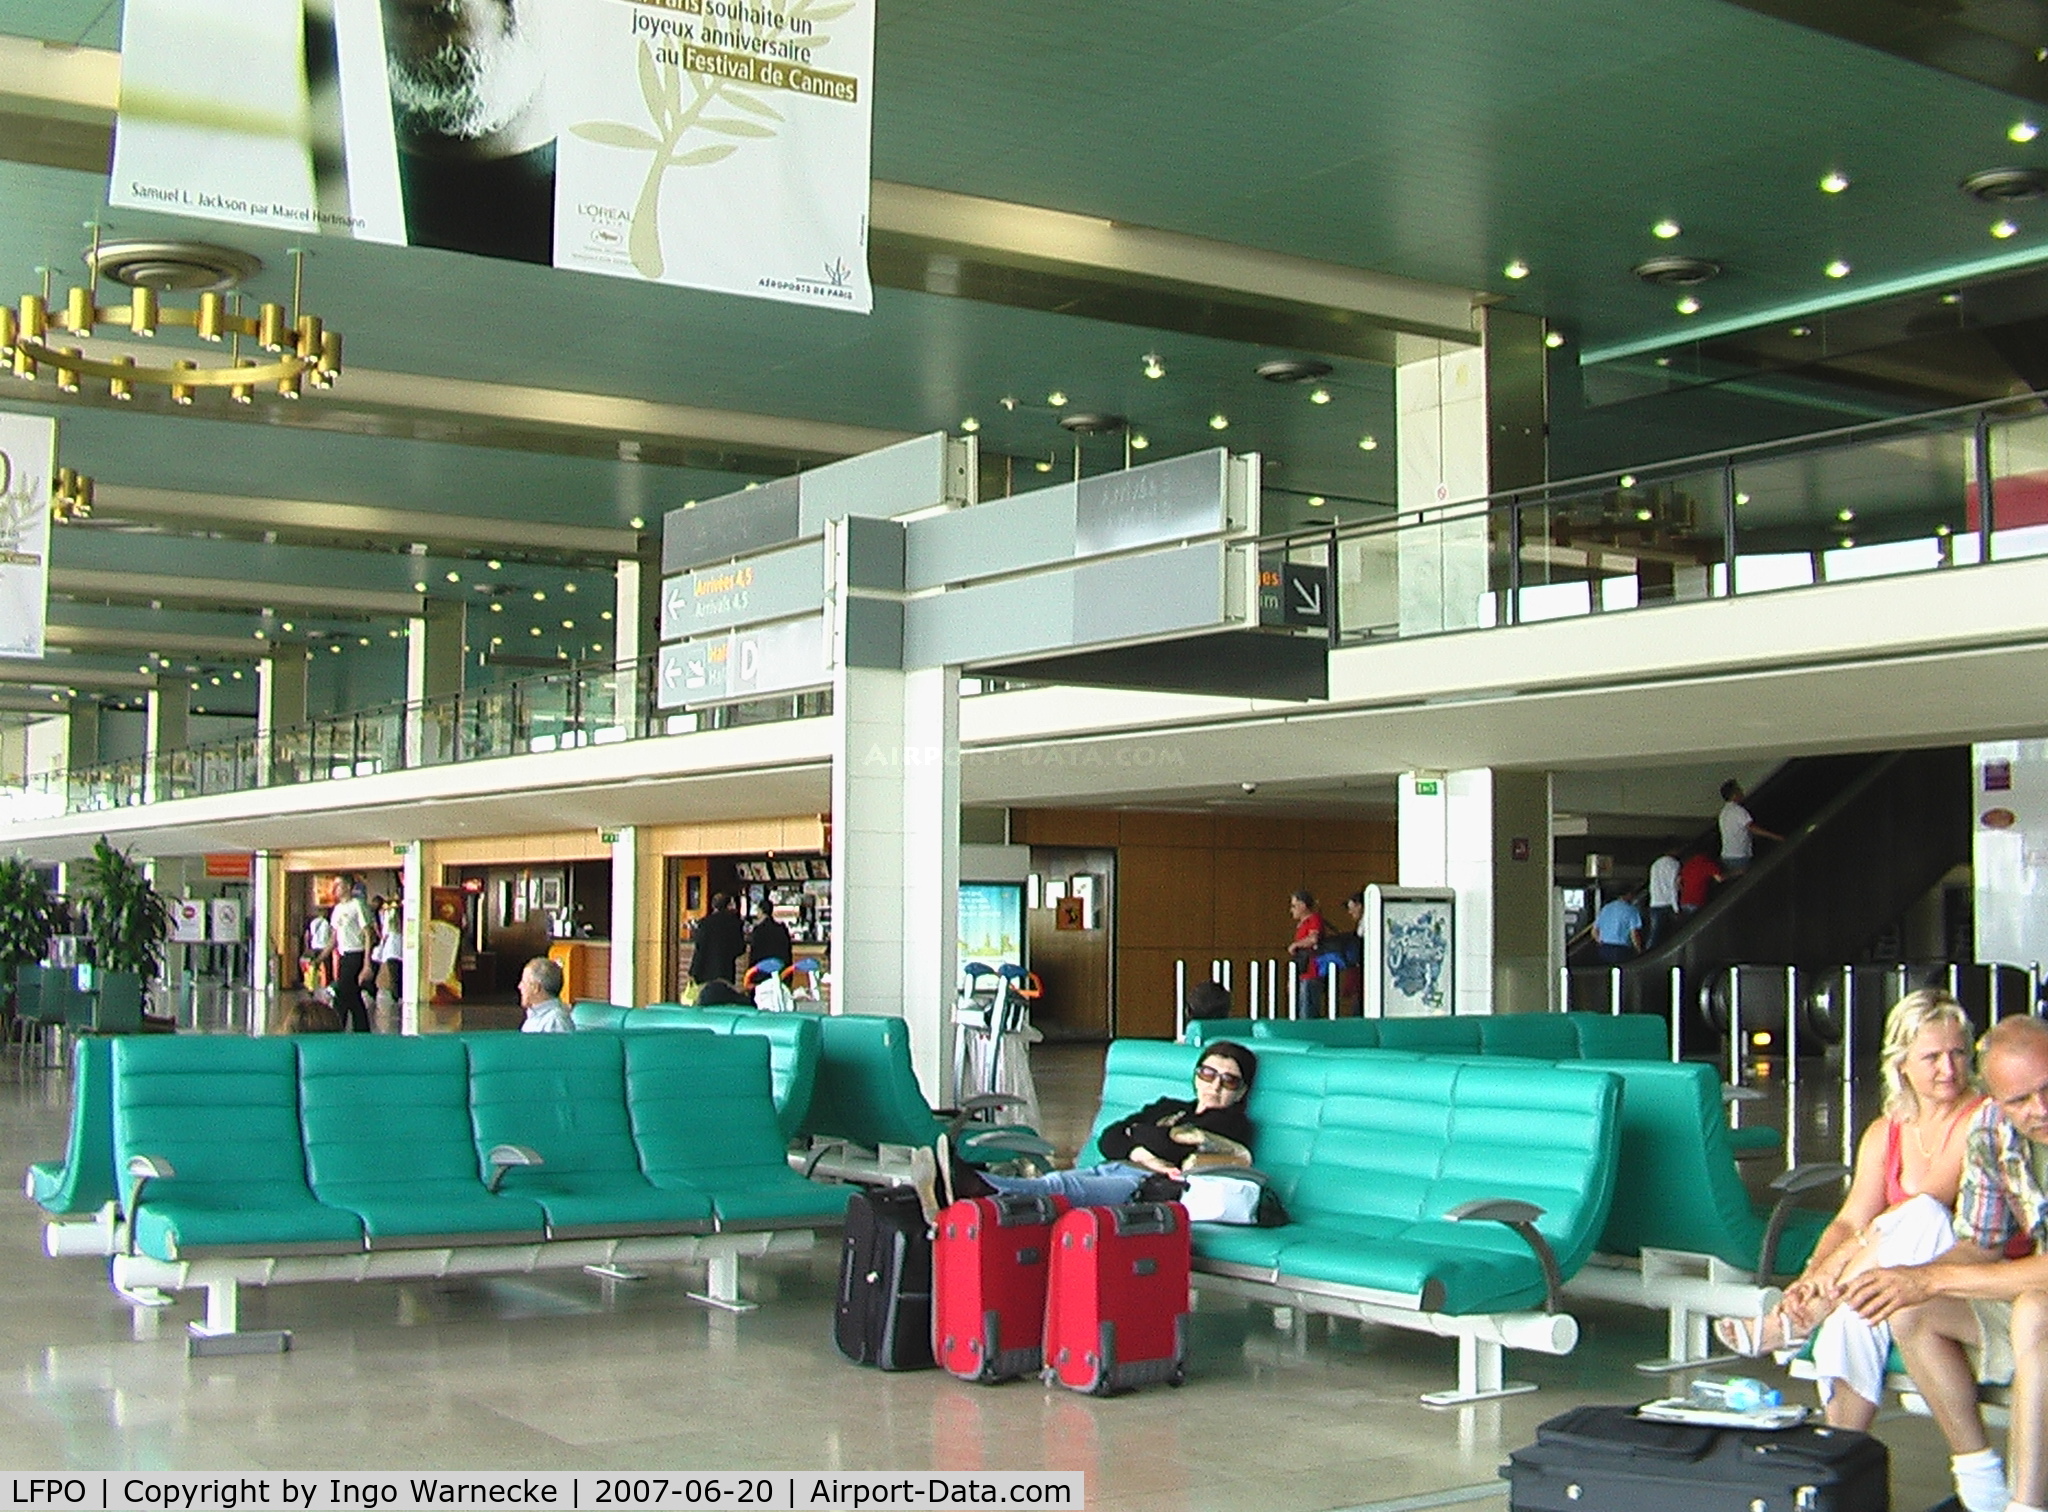 Paris Orly Airport, Orly (near Paris) France (LFPO) - Paris Orly - a wonderful 1960s terminal interior, worth preserving